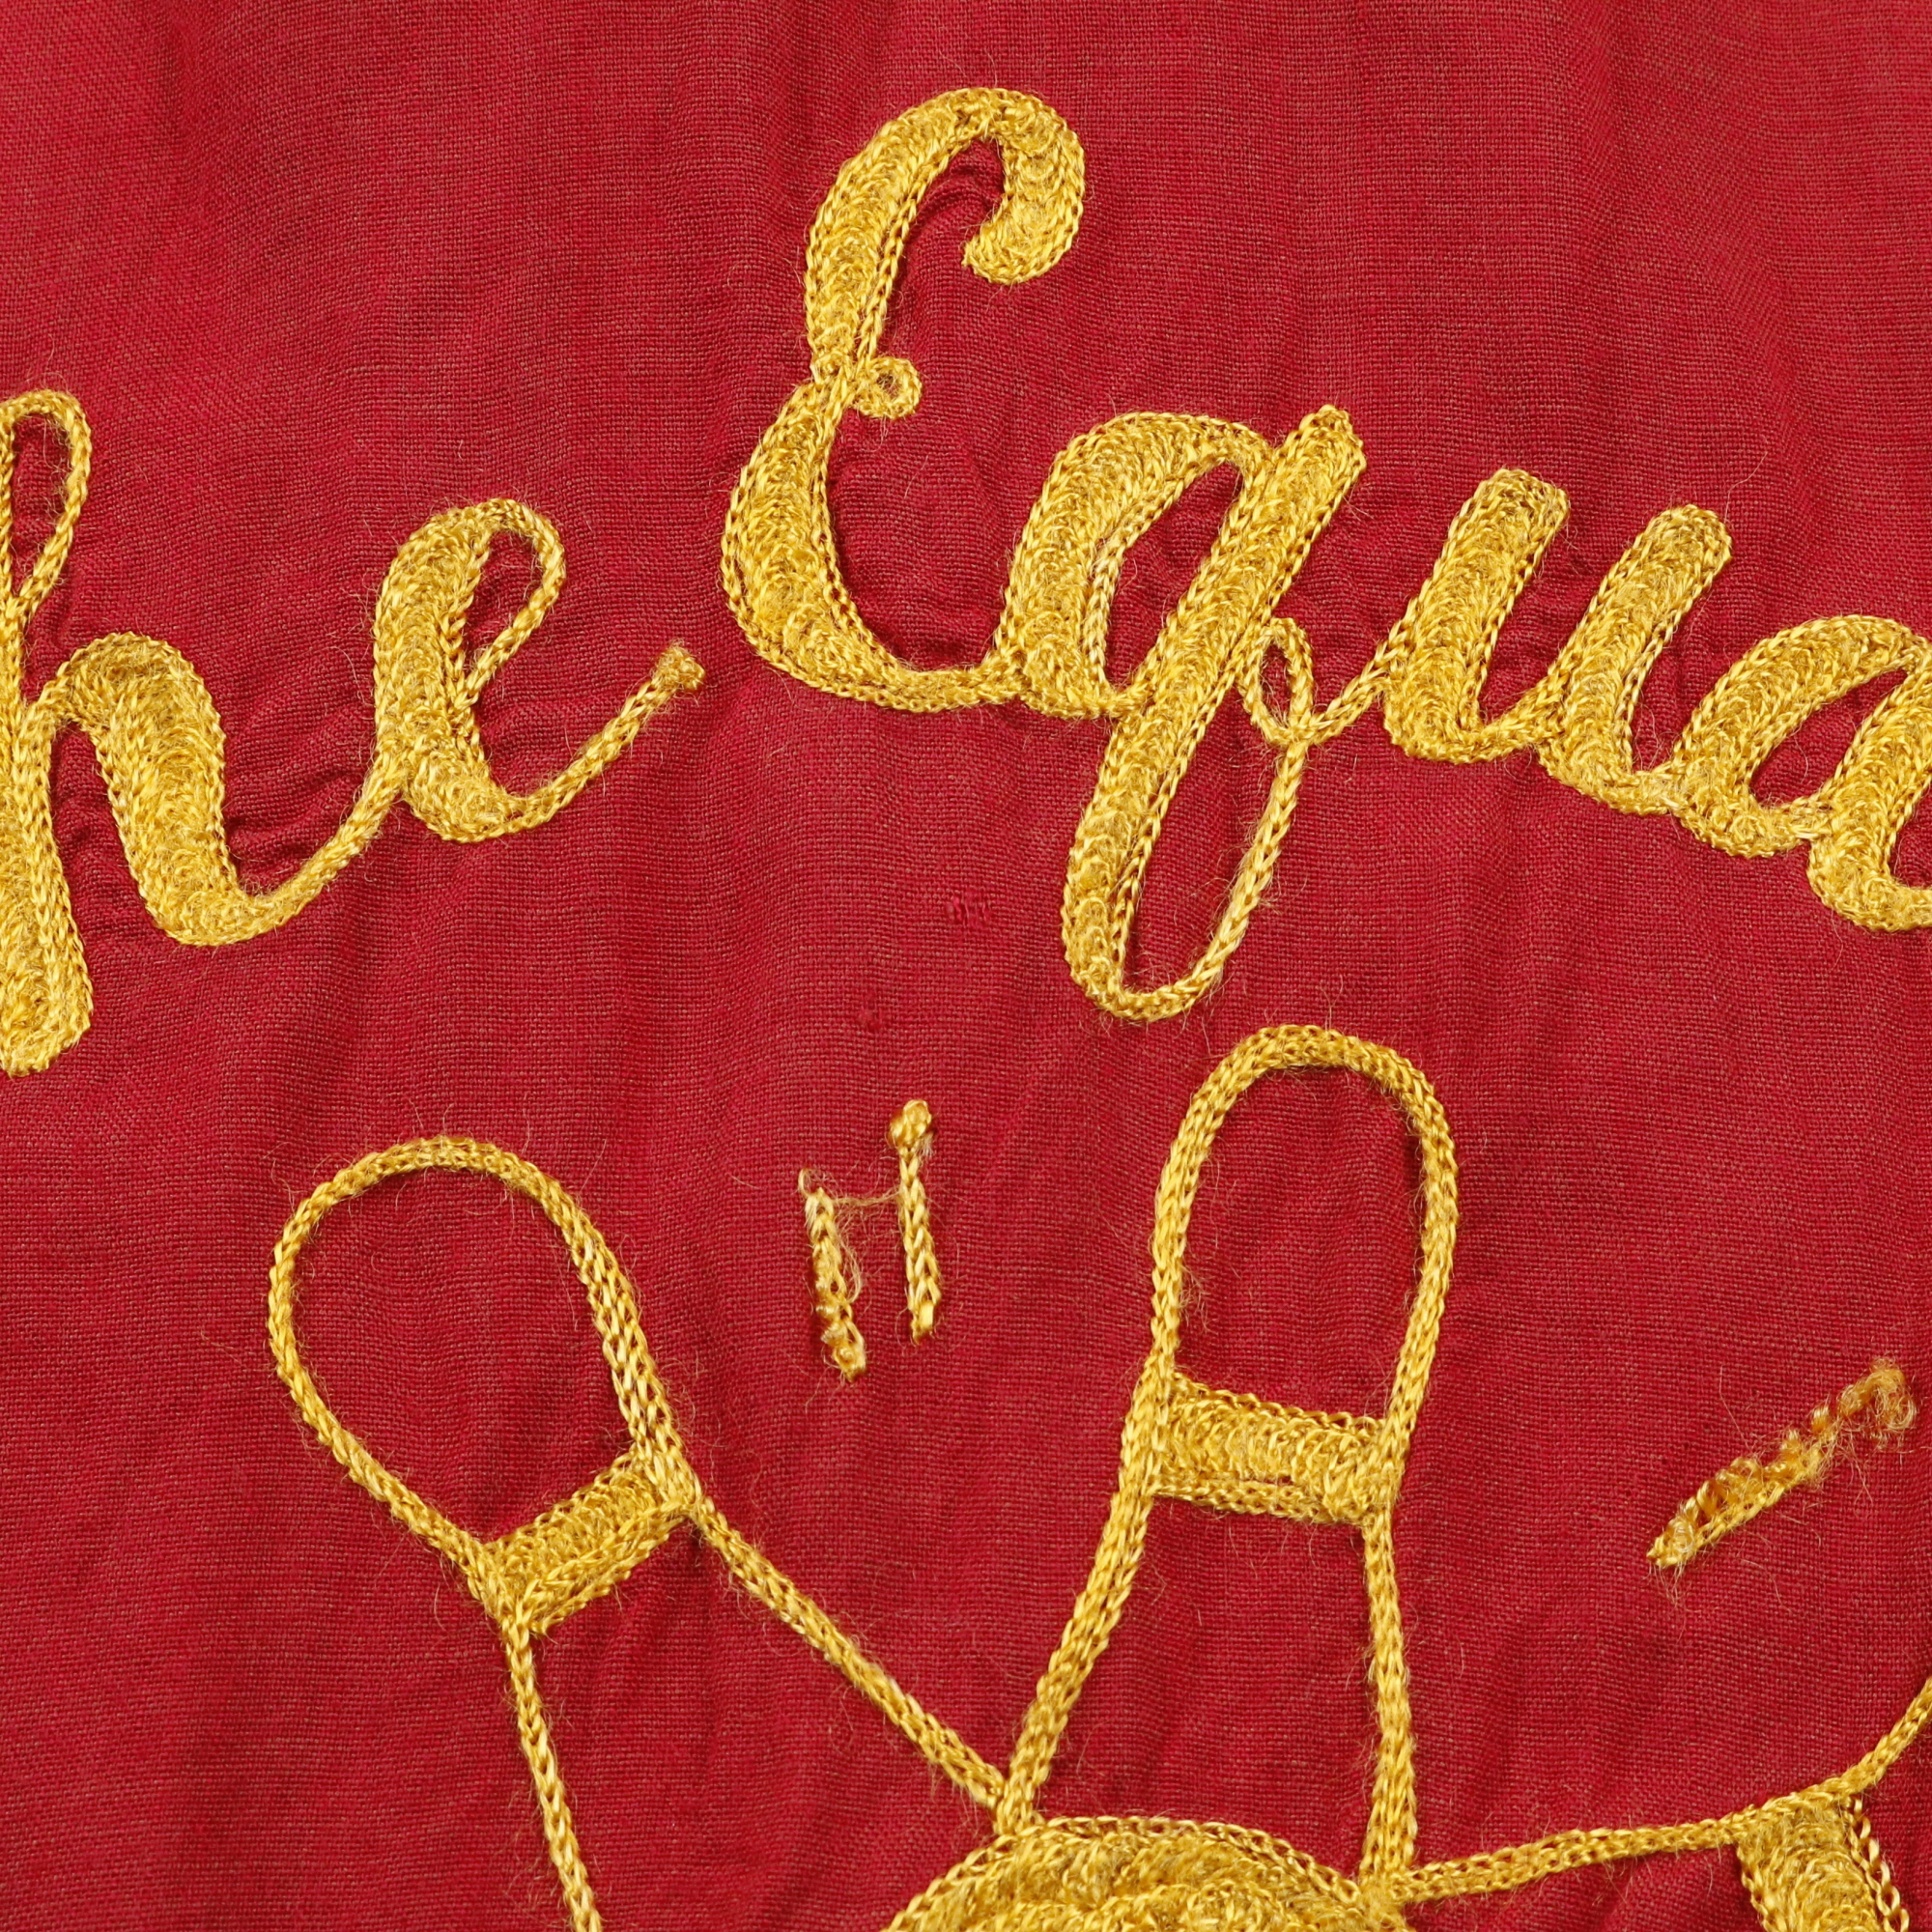 60s ヴィンテージ ボウリングシャツ 刺繍 チェーンステッチ 半袖 S/S レーヨン 赤 レッド S程